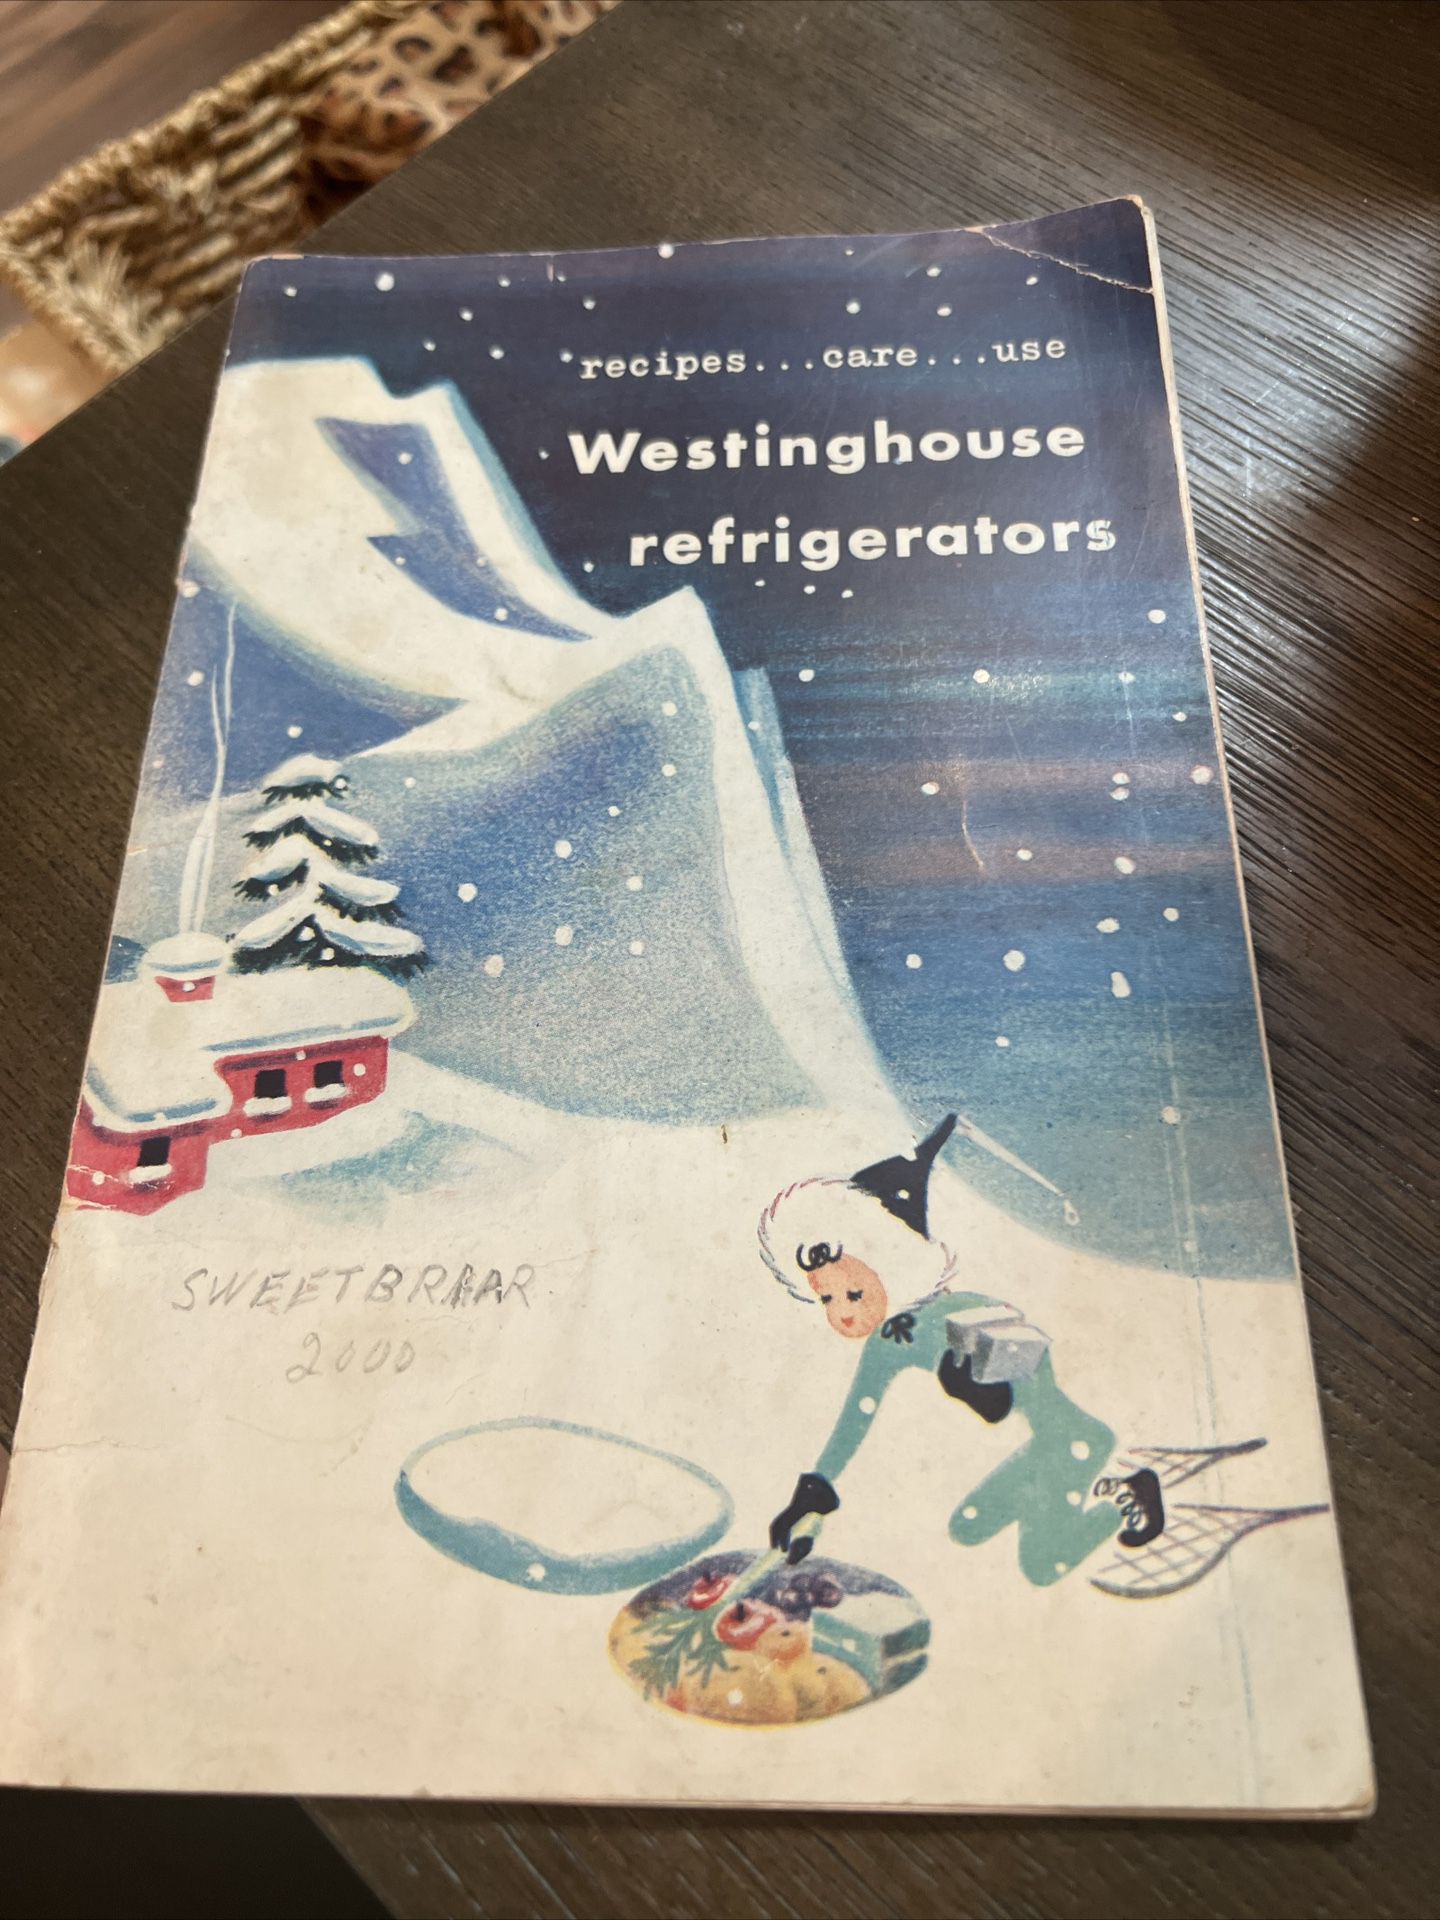 Westinghouse Refrigerators 1950 Recipes, Care, Use, Promotional Manual, Cookbook